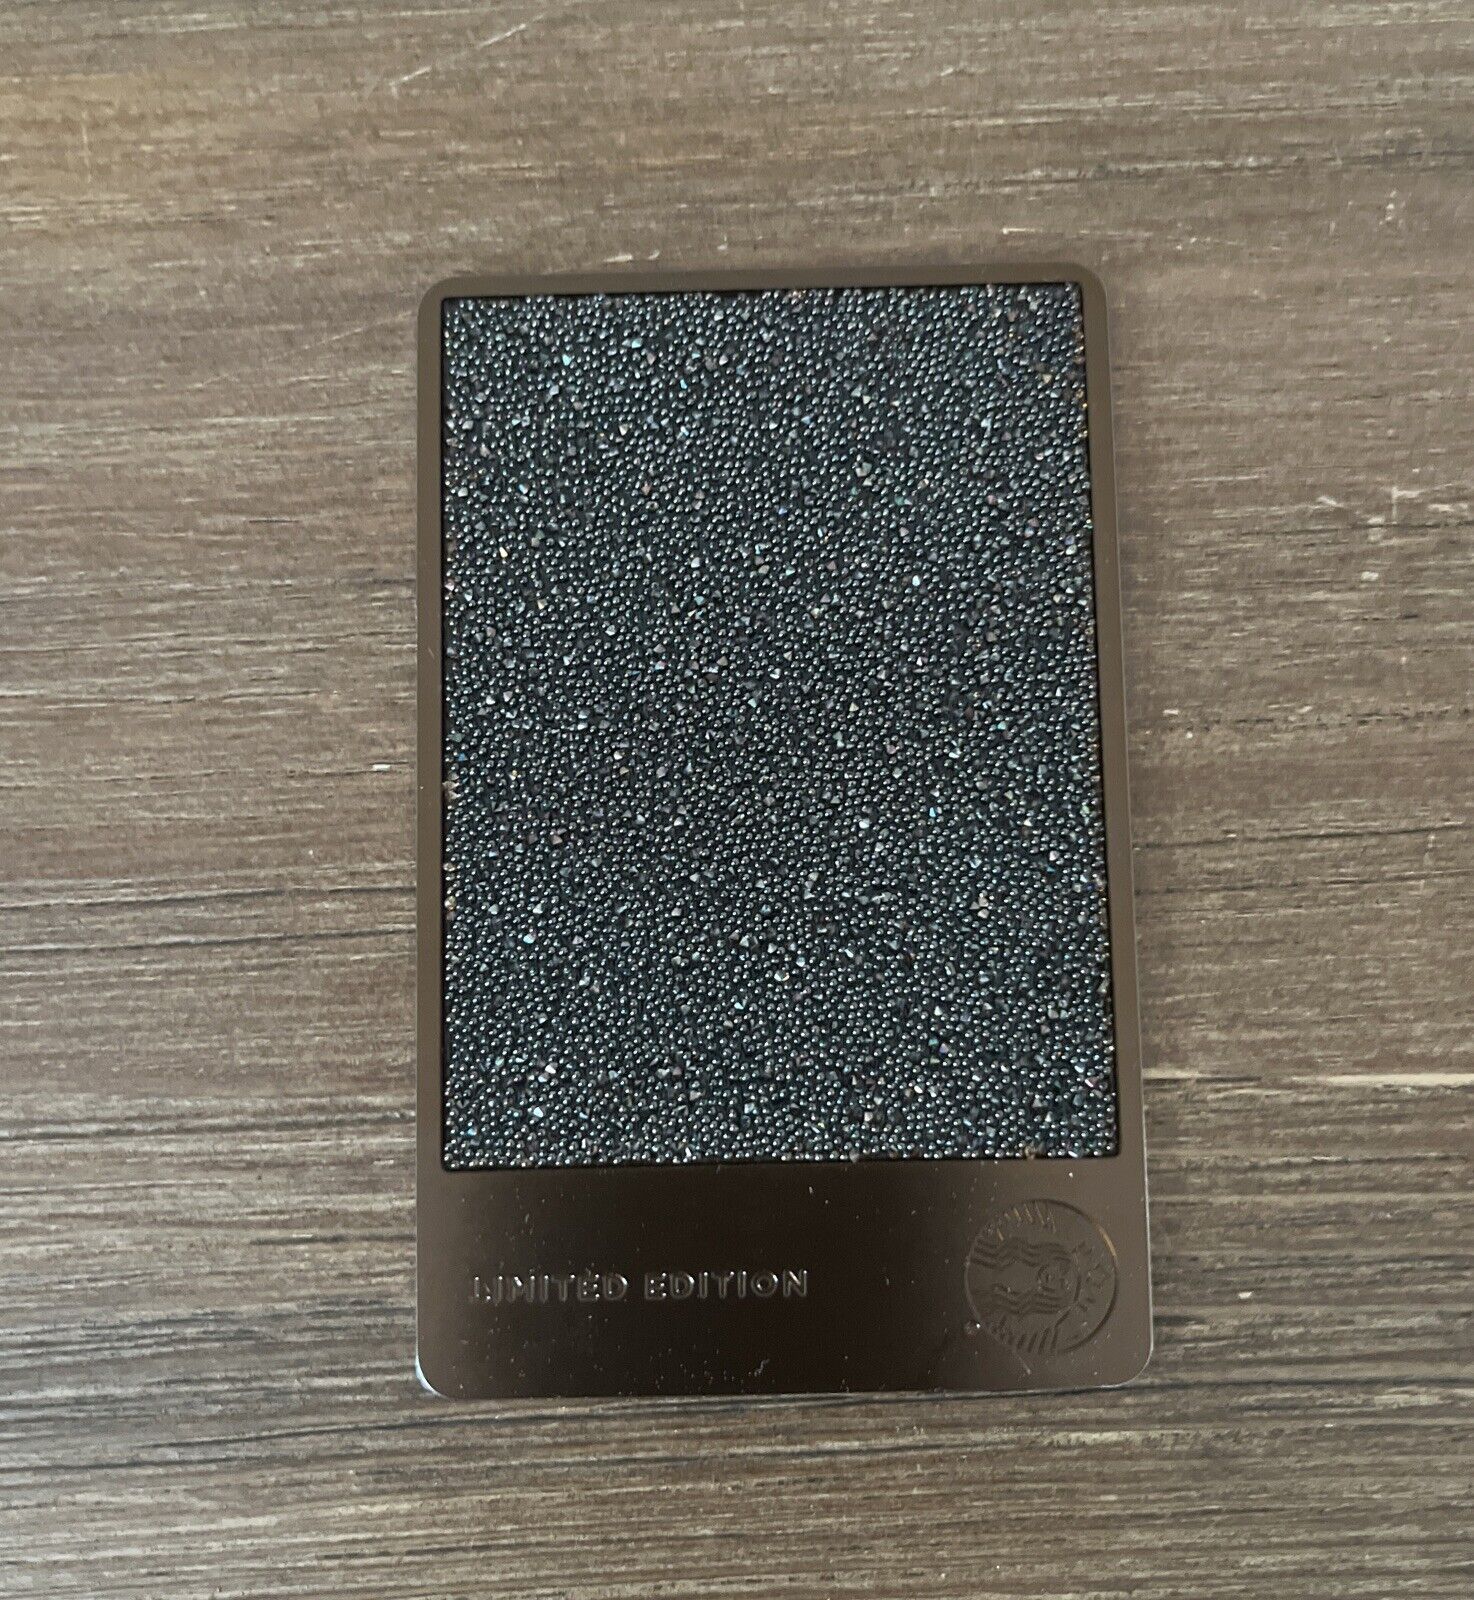 Starbucks 2016 Espresso Swarovski Crystal Limited Edition Metal Gift Card Brown